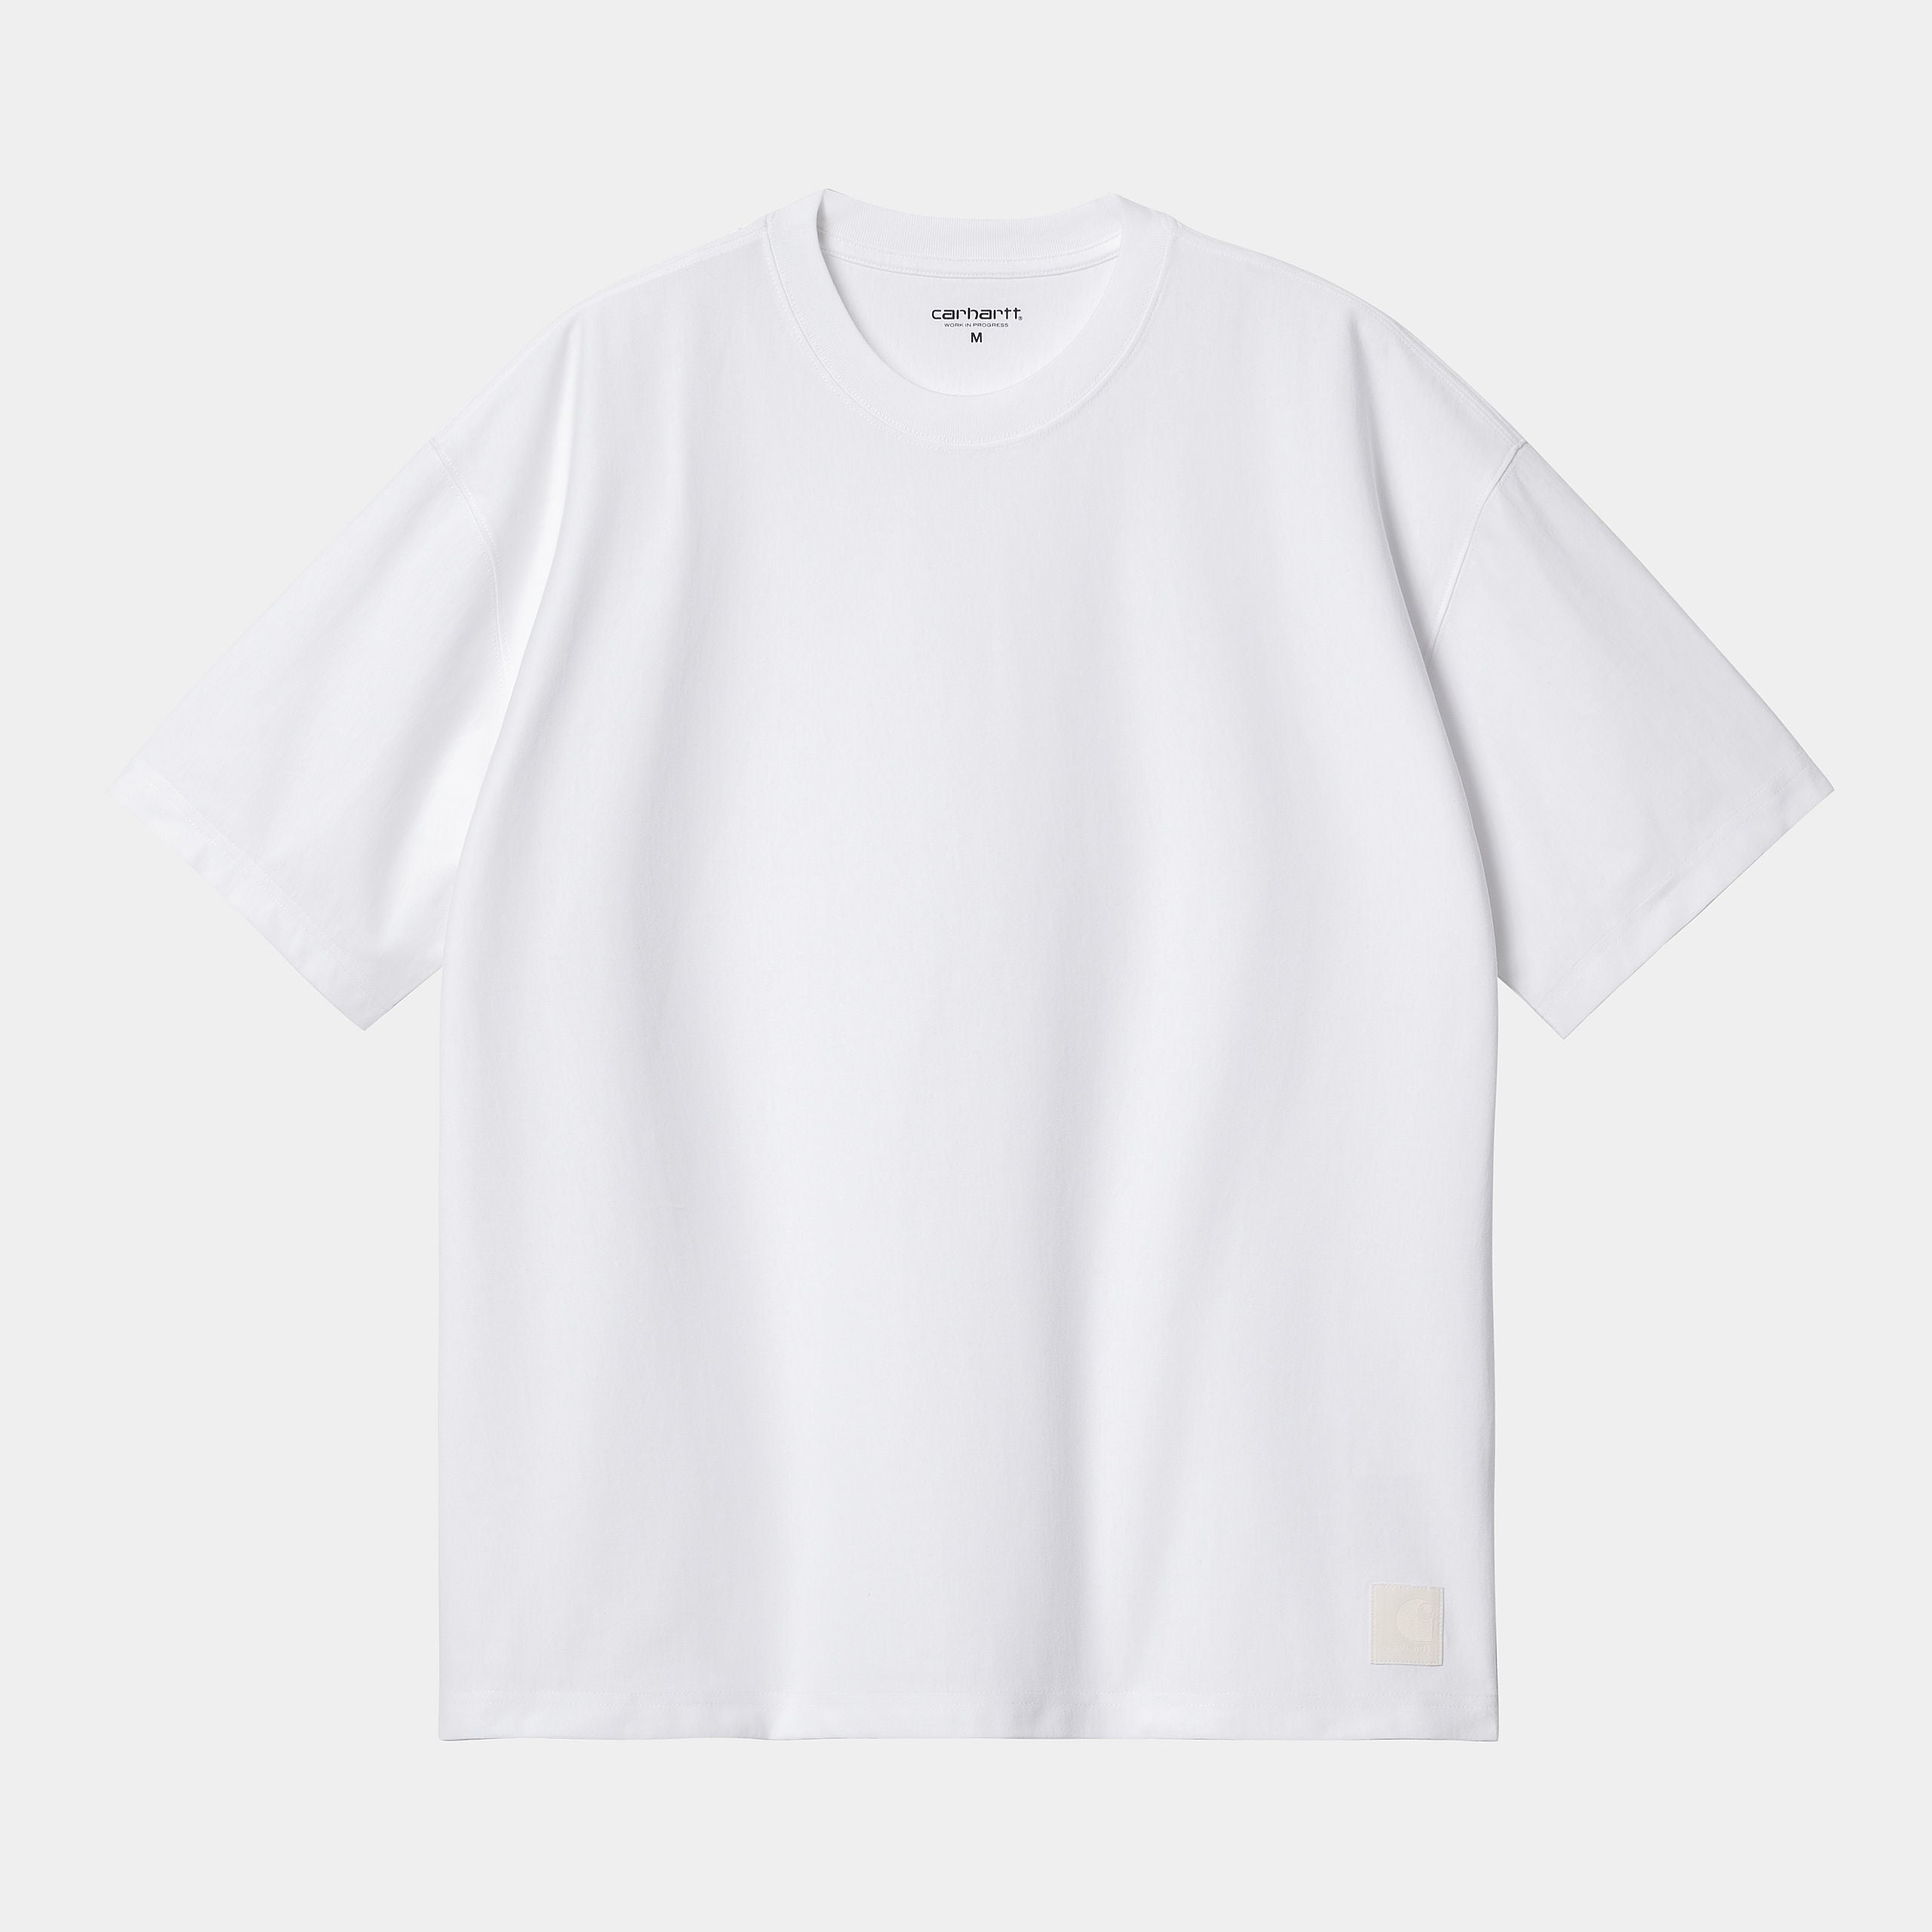 S/S Dawson T-shirt - Carhartt WIP